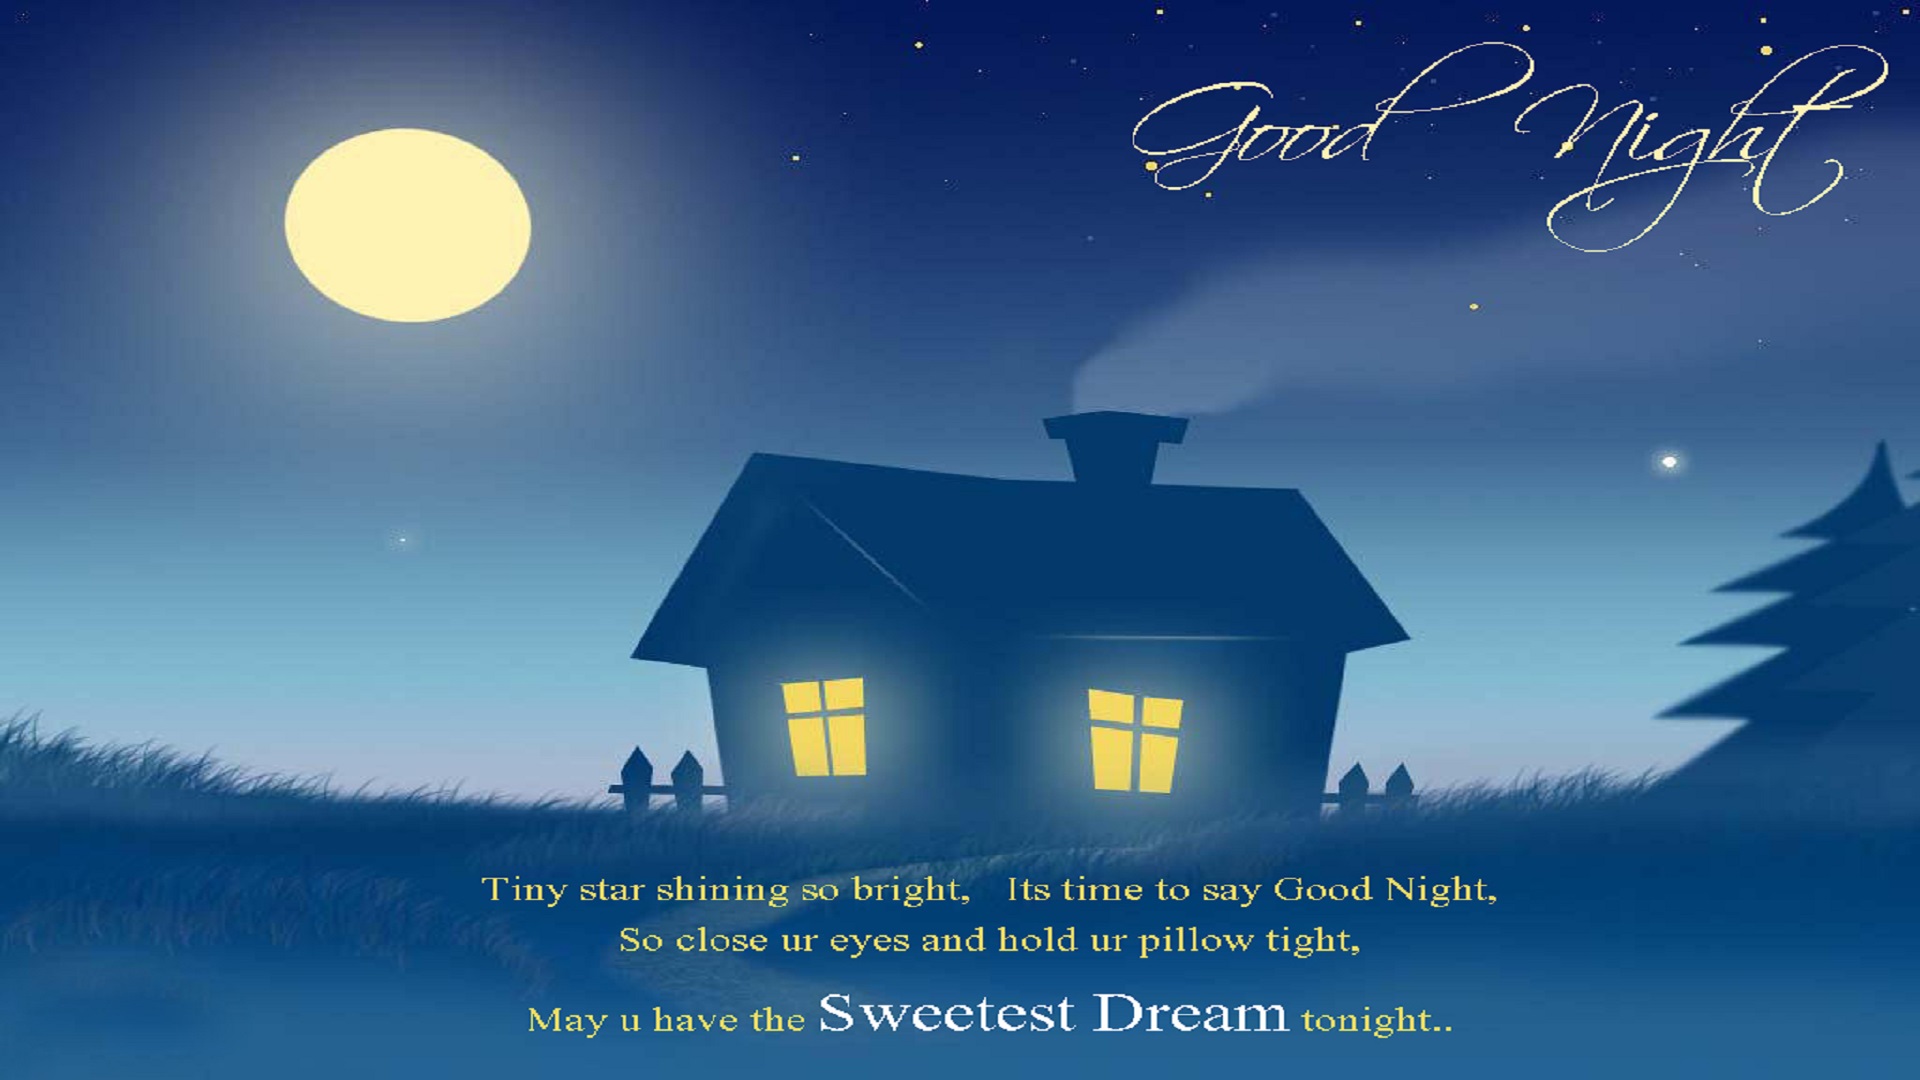 good night sweet dreams moon image